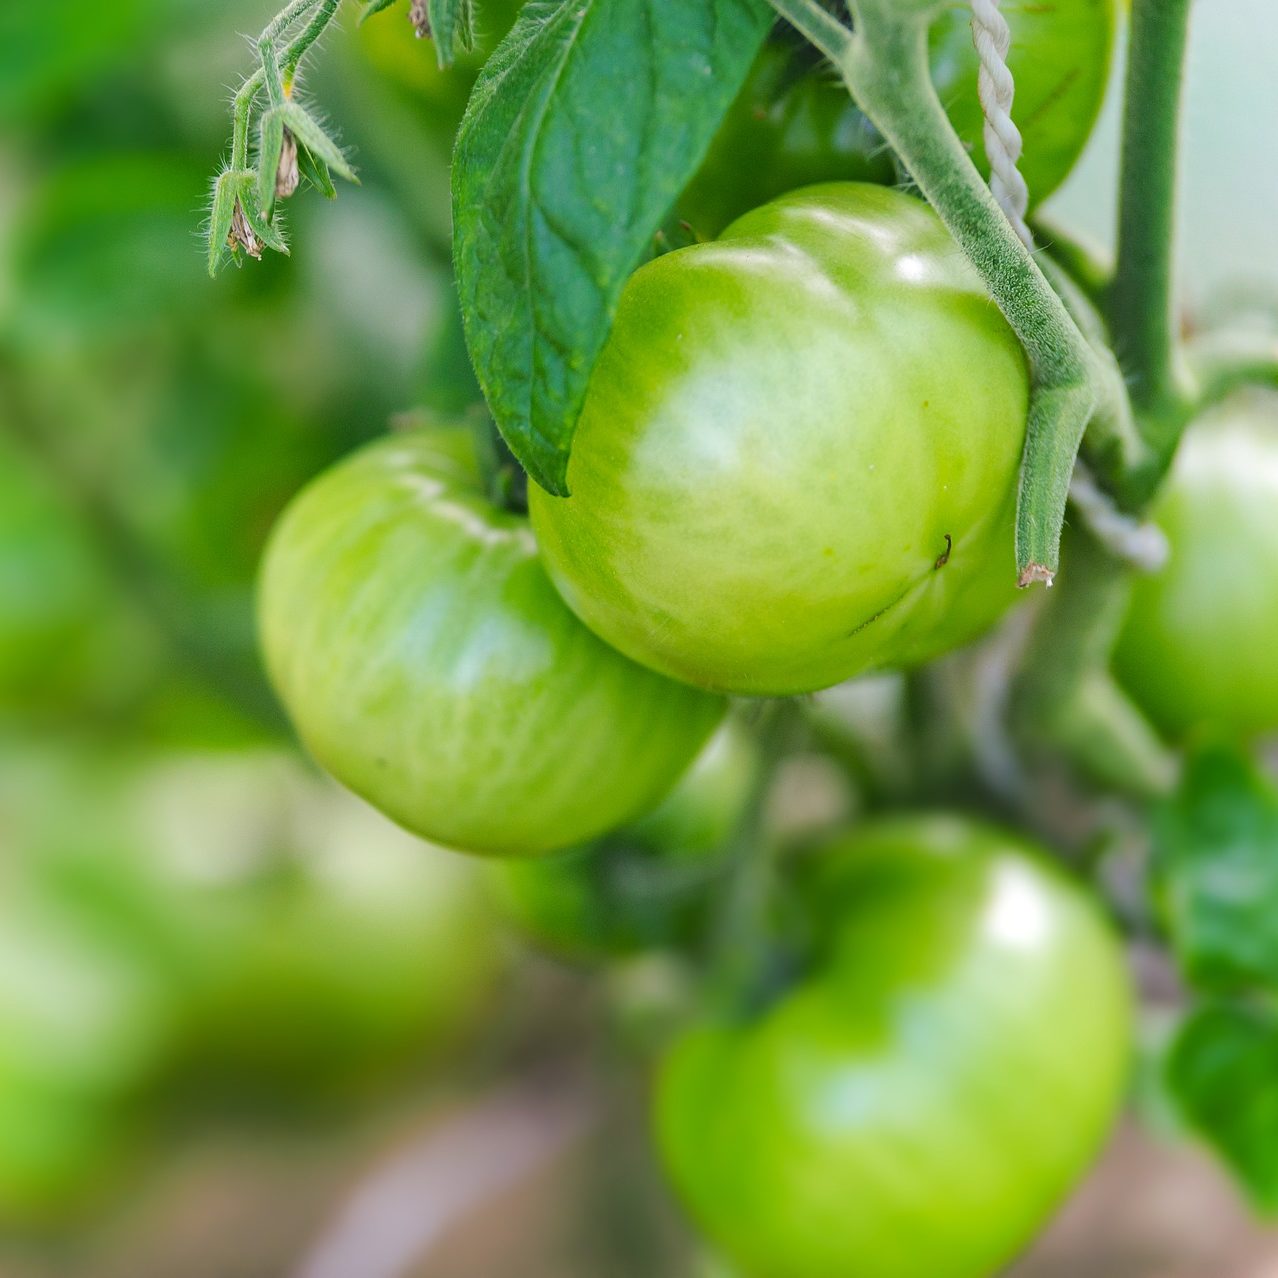 Green tomatoes 